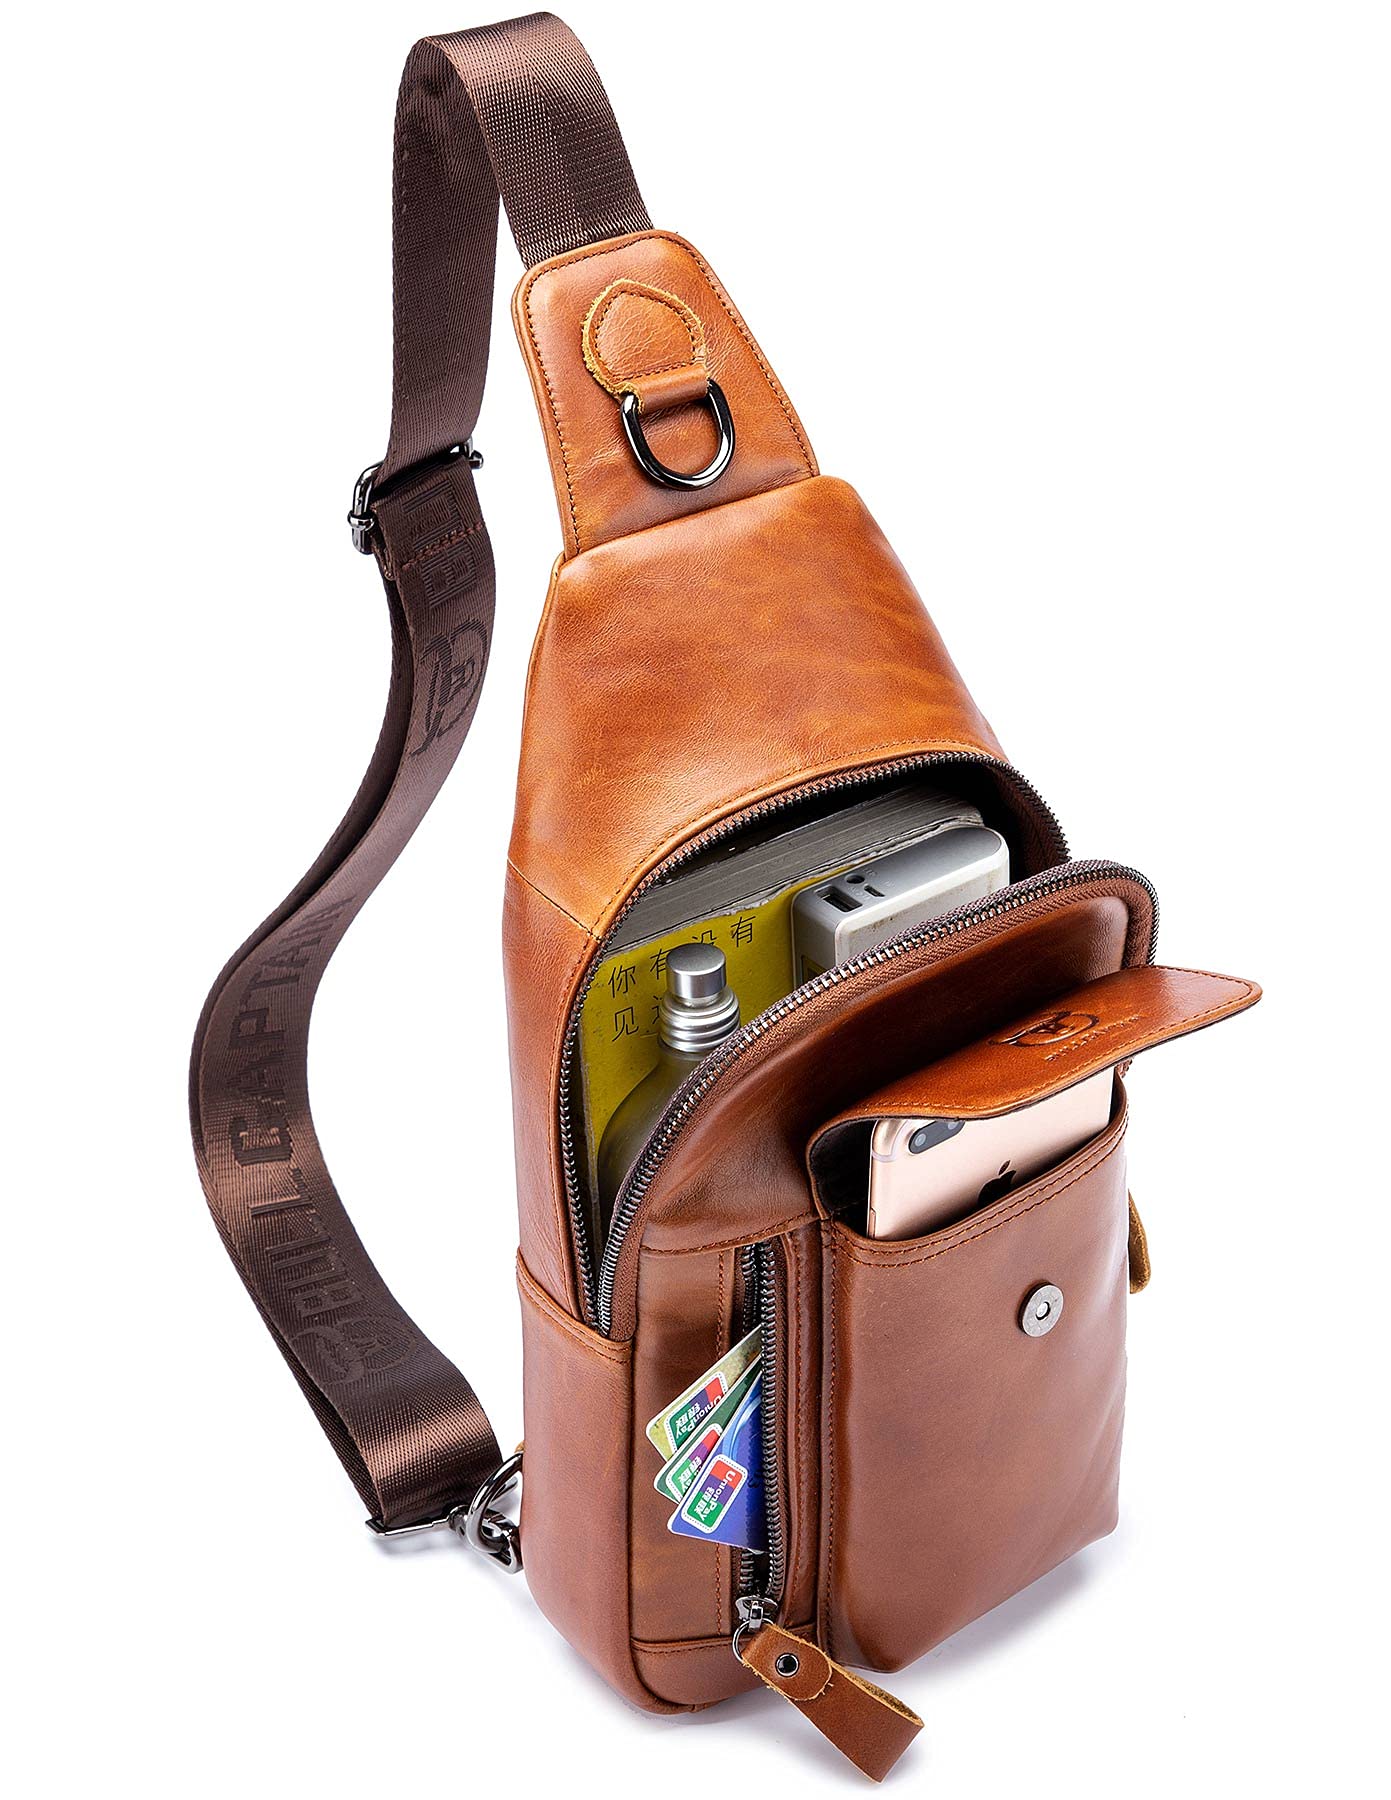 BULLCAPTAIN Genuine Leather Sling Bag for Men Leather Casual Crossbody Shoulder Backpack Travel Hiking Vintage Chest Bags Mens Daypacks (Brown)